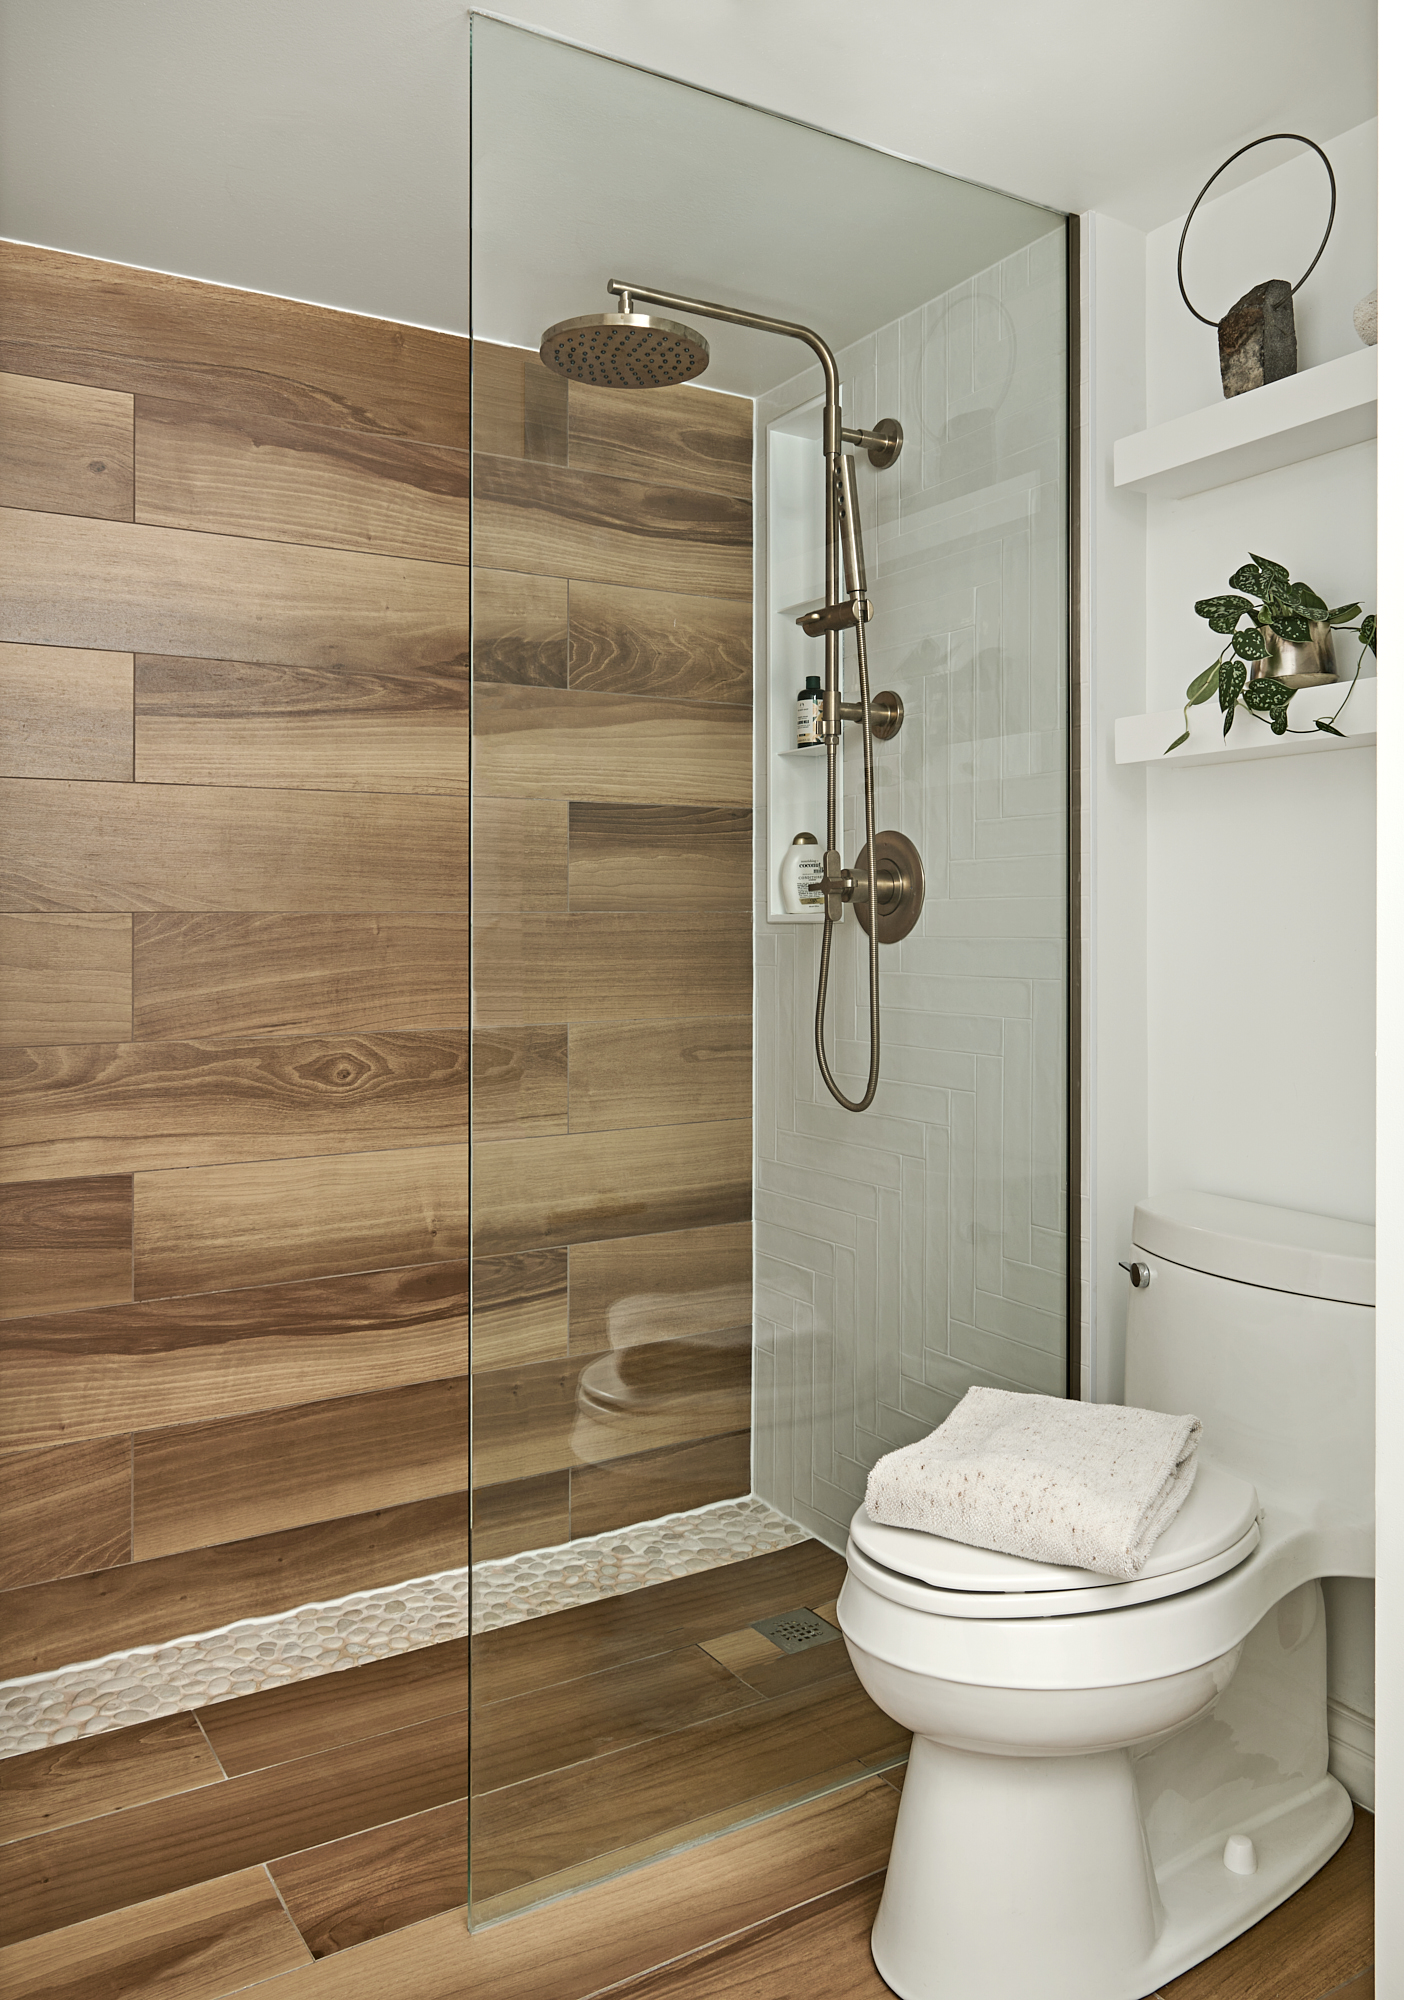 Best Residential Bathroom Design Under 75 sq ft - 04